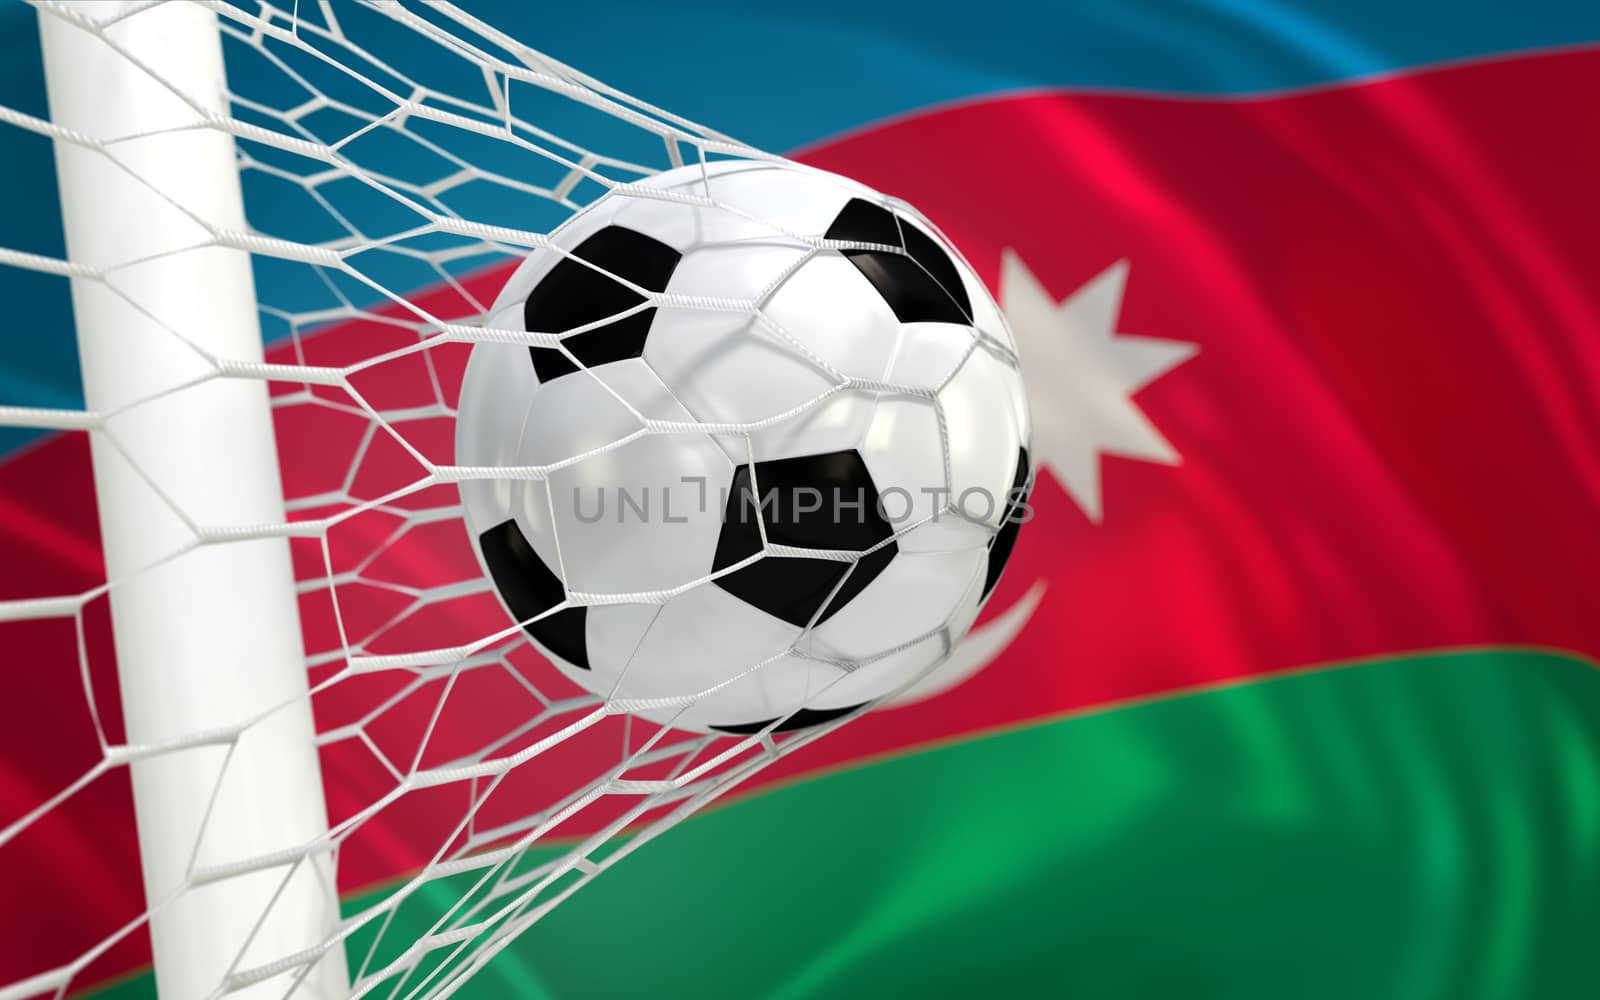 Azerbajan flag and soccer ball, football in goal net